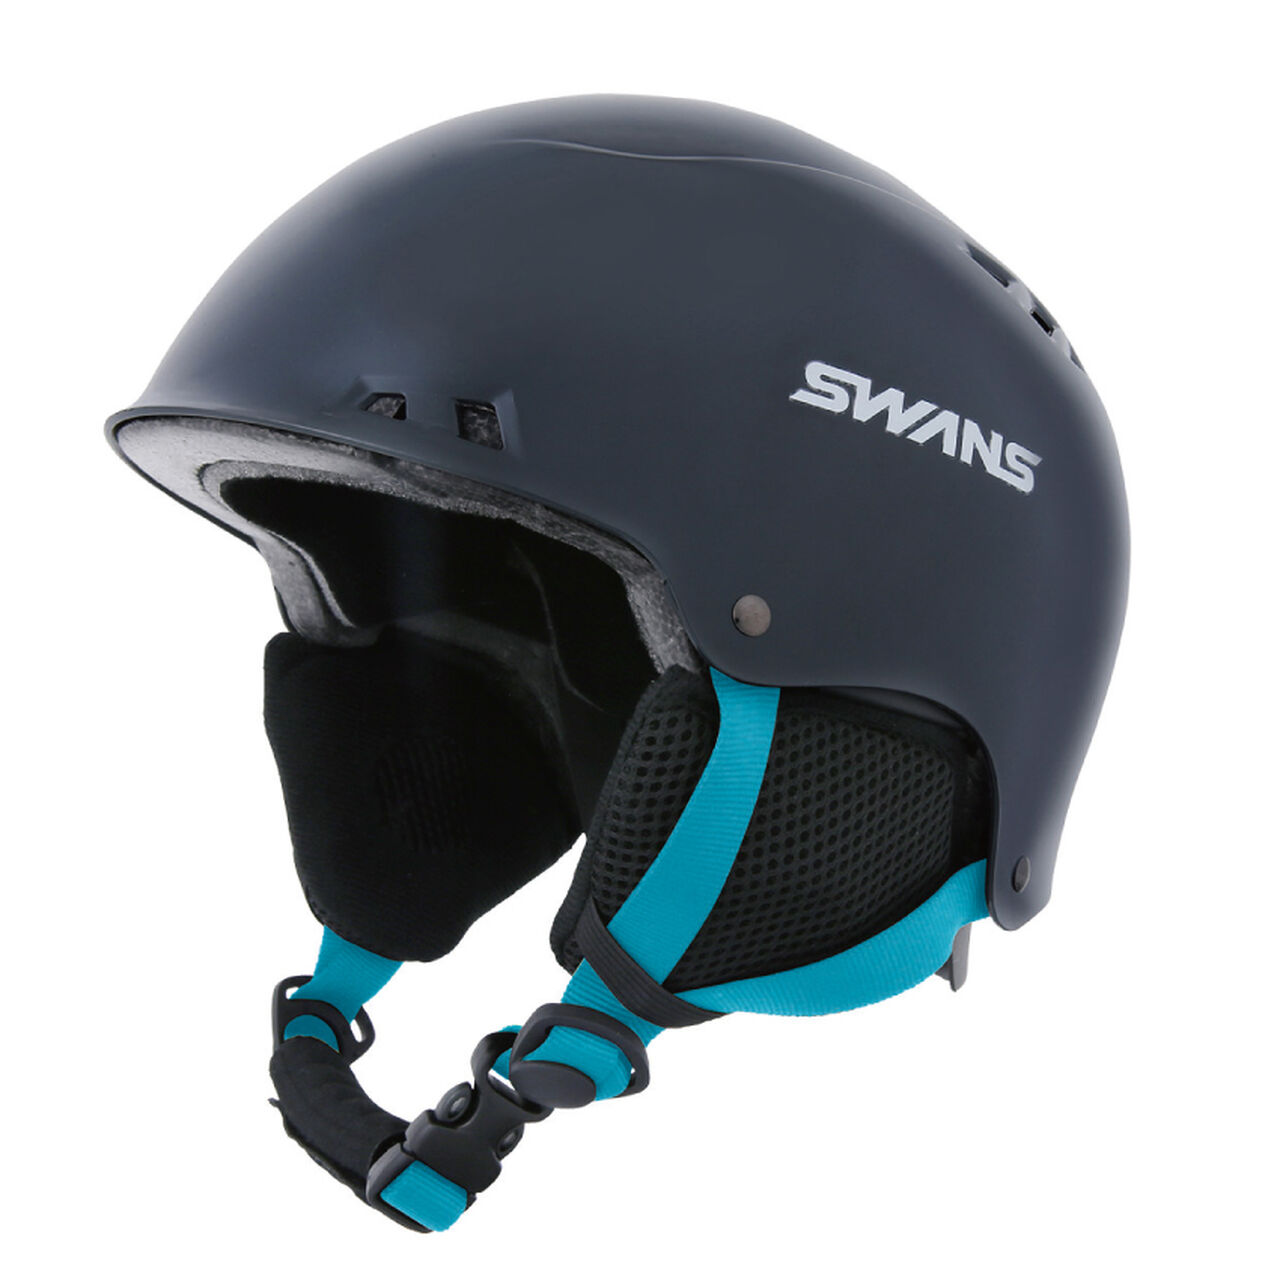 H-461R snow helmet Black M size,Opt1, large image number 0